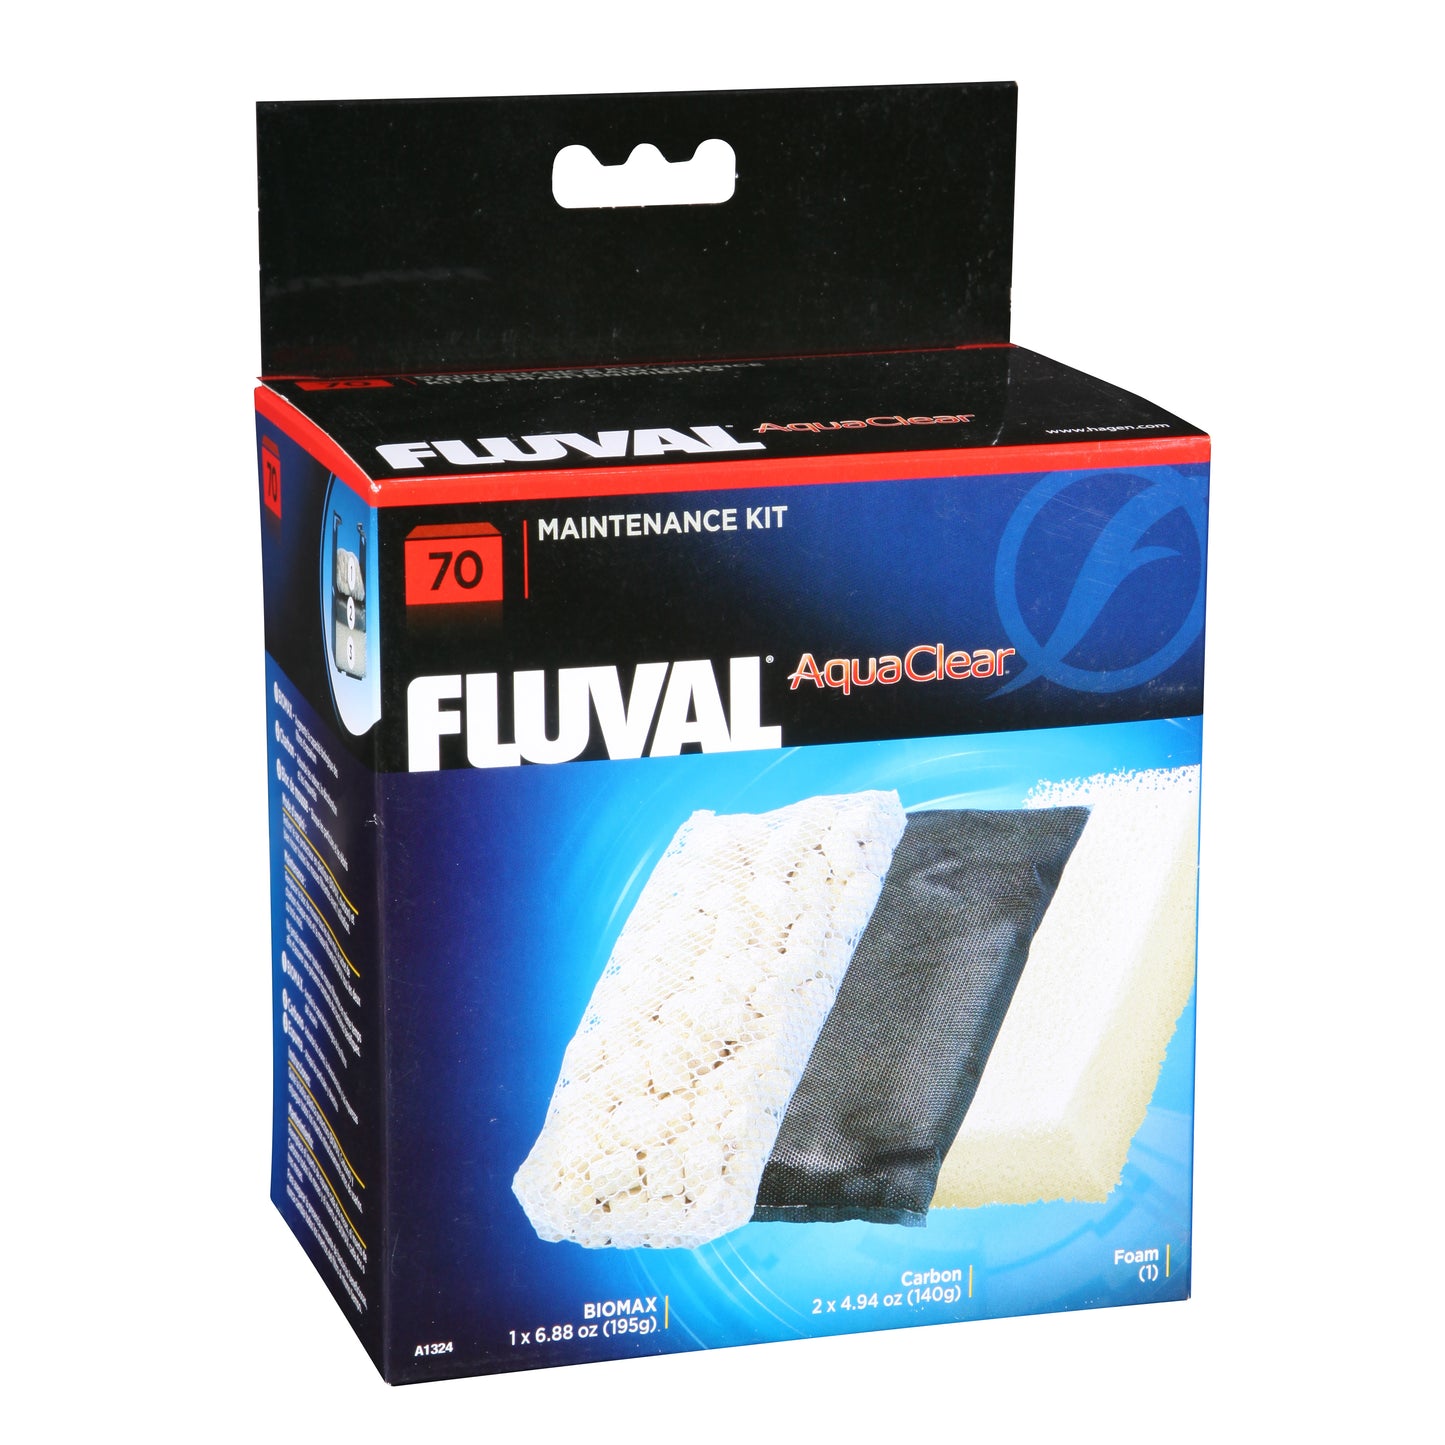 Fuval / Aquaclear 20/30/50/70/110 Filter Media Maintenance Kit